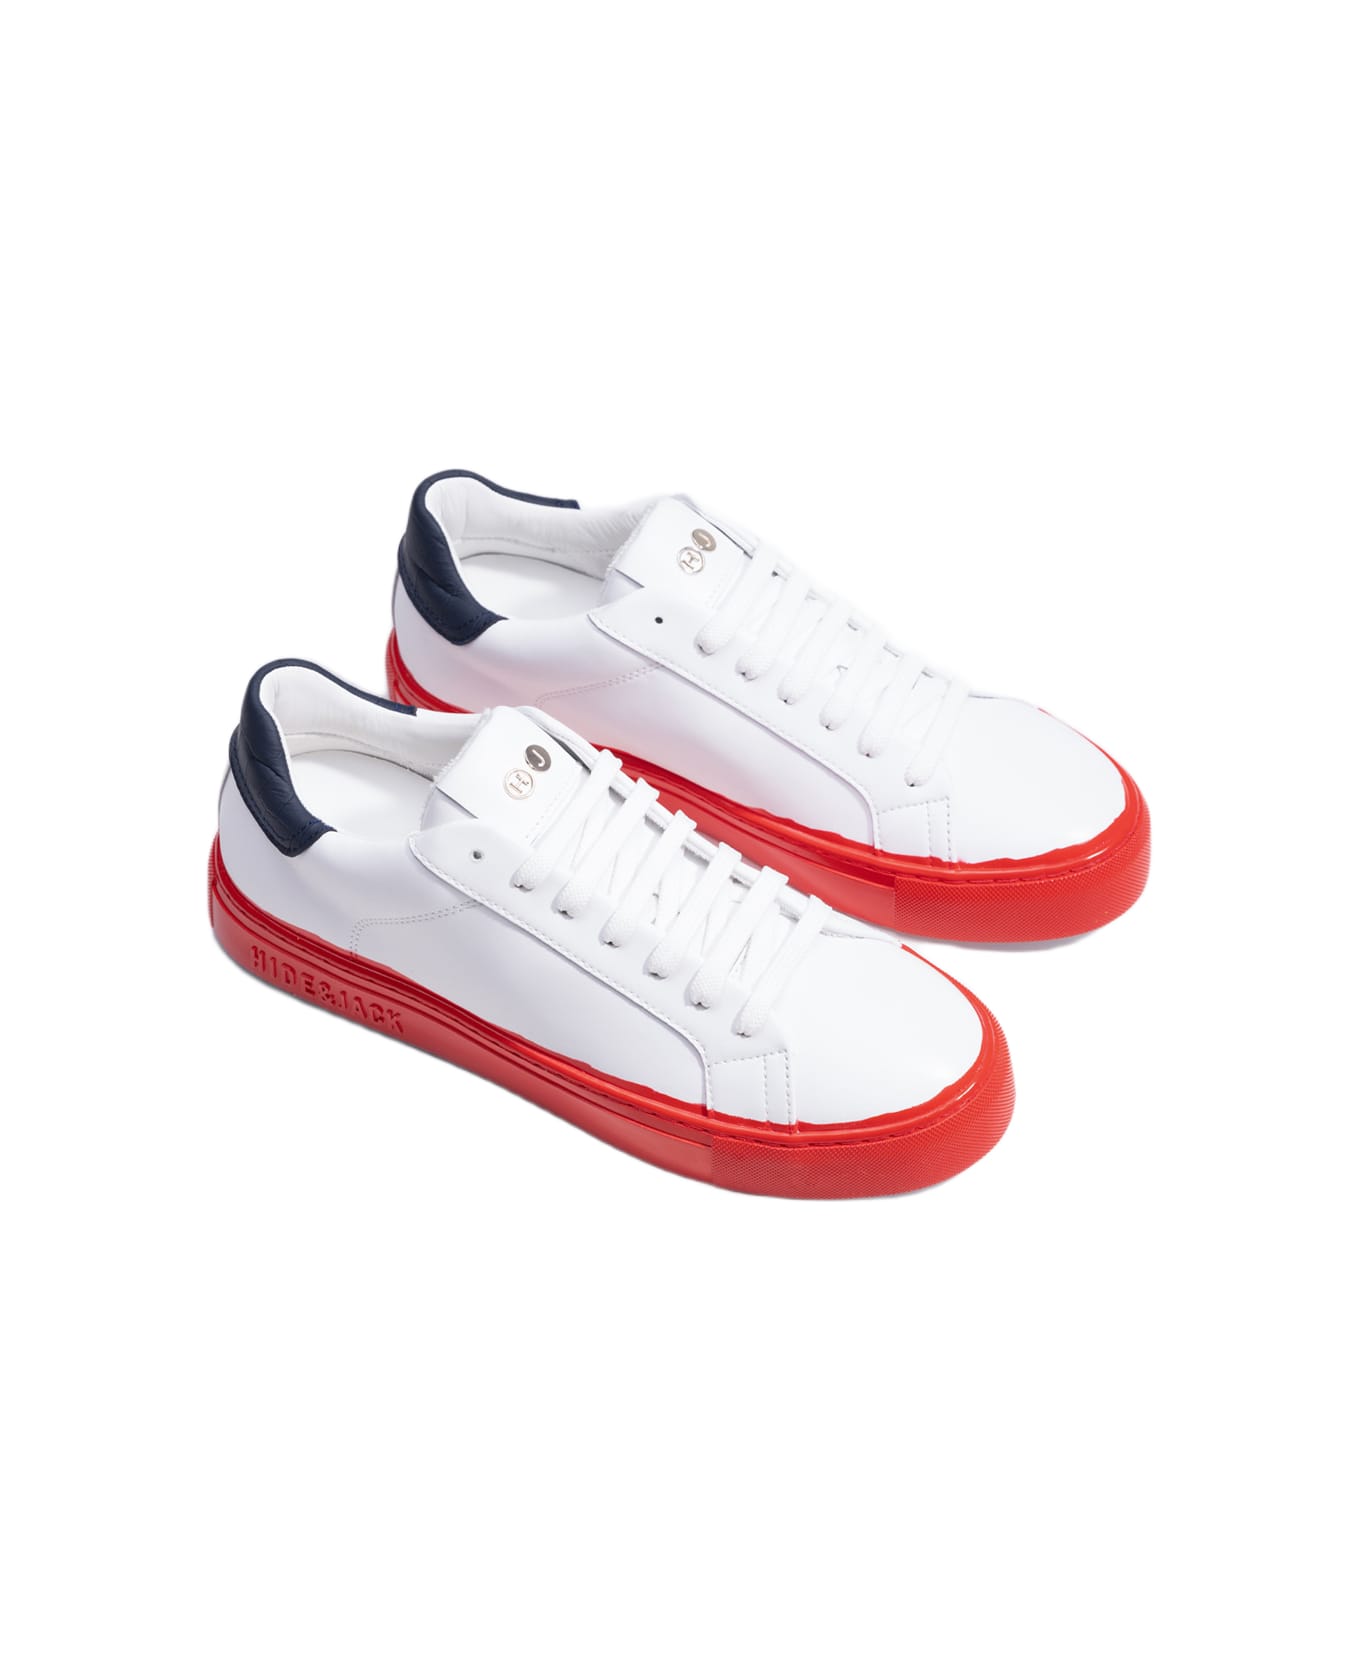 Hide&Jack Low Top Sneaker - Sky Candy Blue Red スニーカー